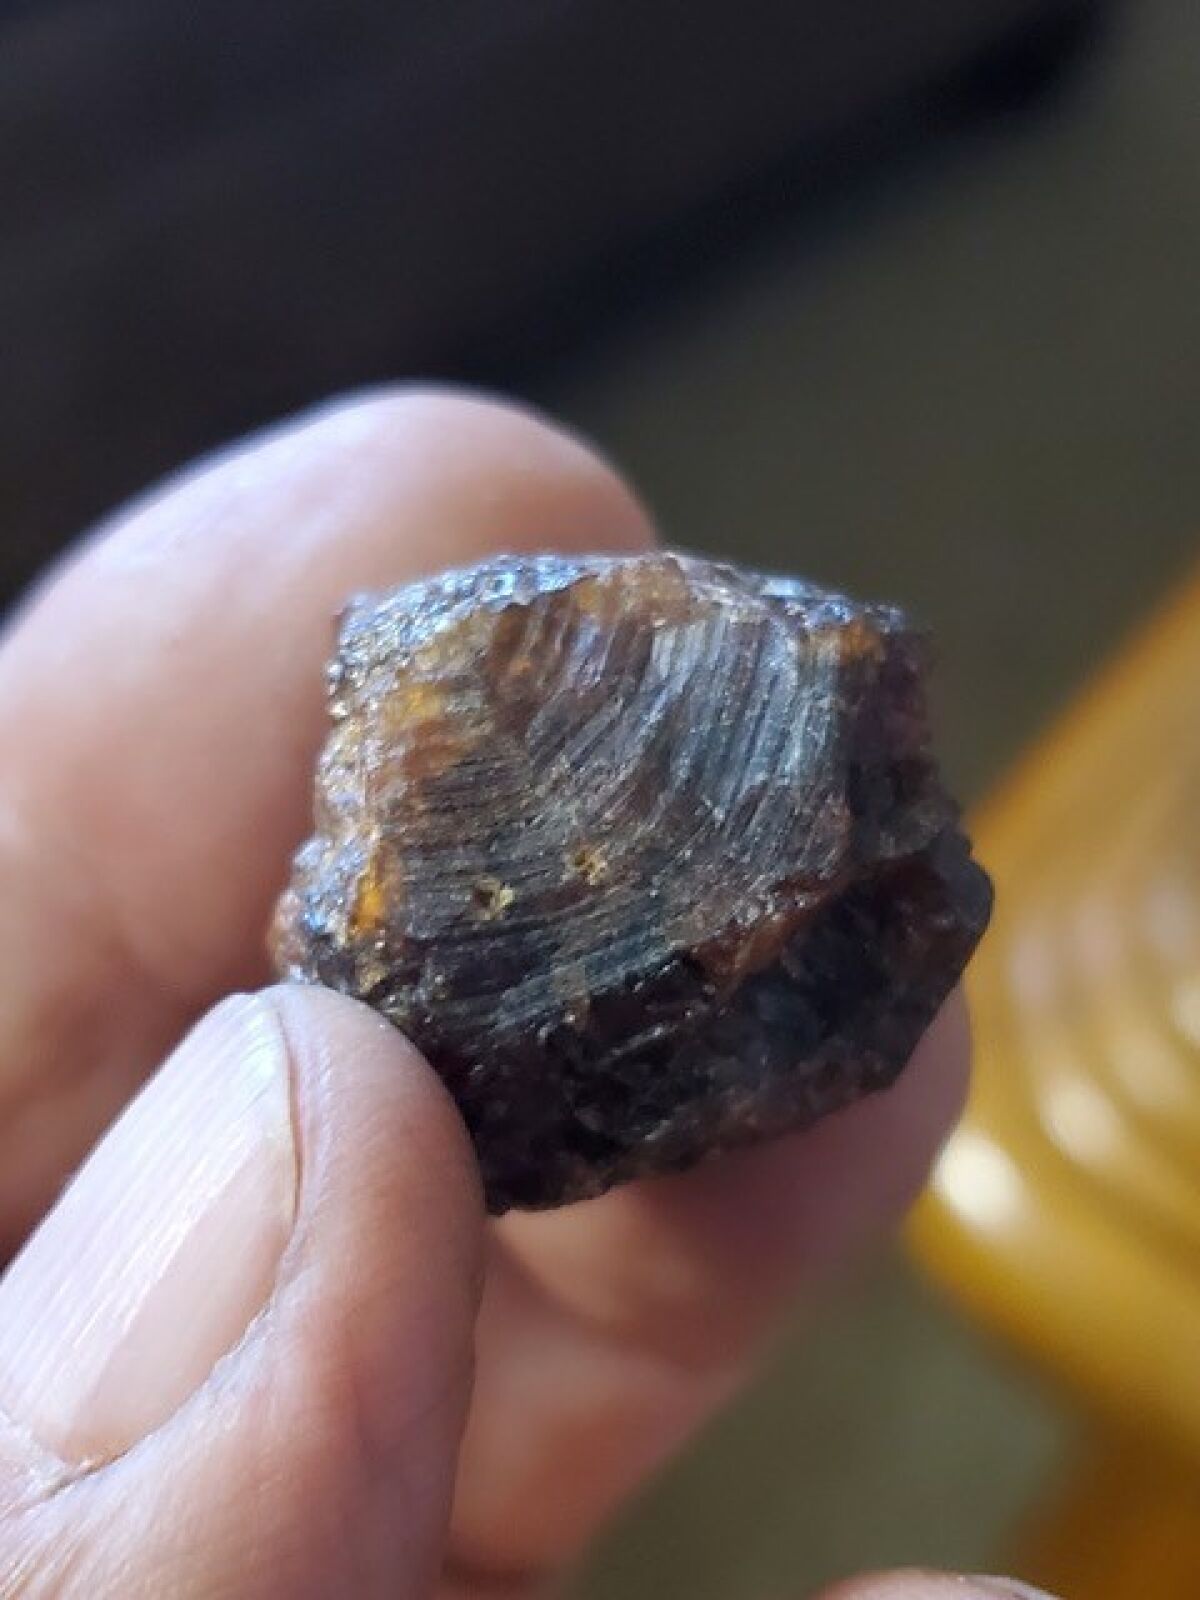 A hessonite garnet crystal found locally by Joe Cahak.